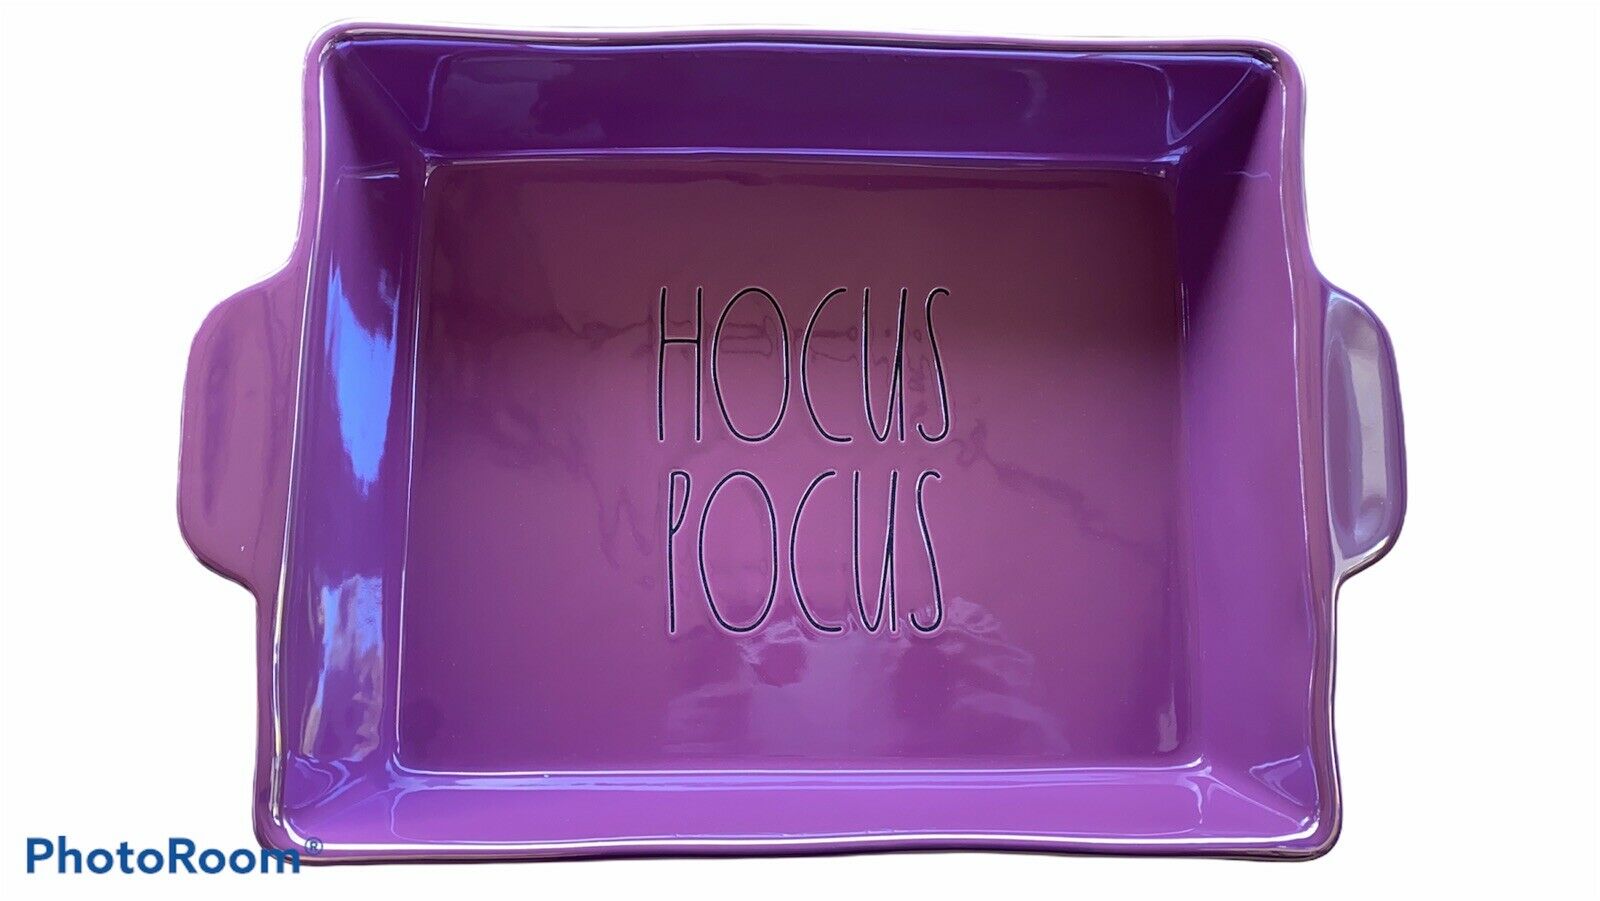 Rae Dunn Halloween Hocus Pocus 2021 Casserole Baking Dish Purple Nib Iridescent